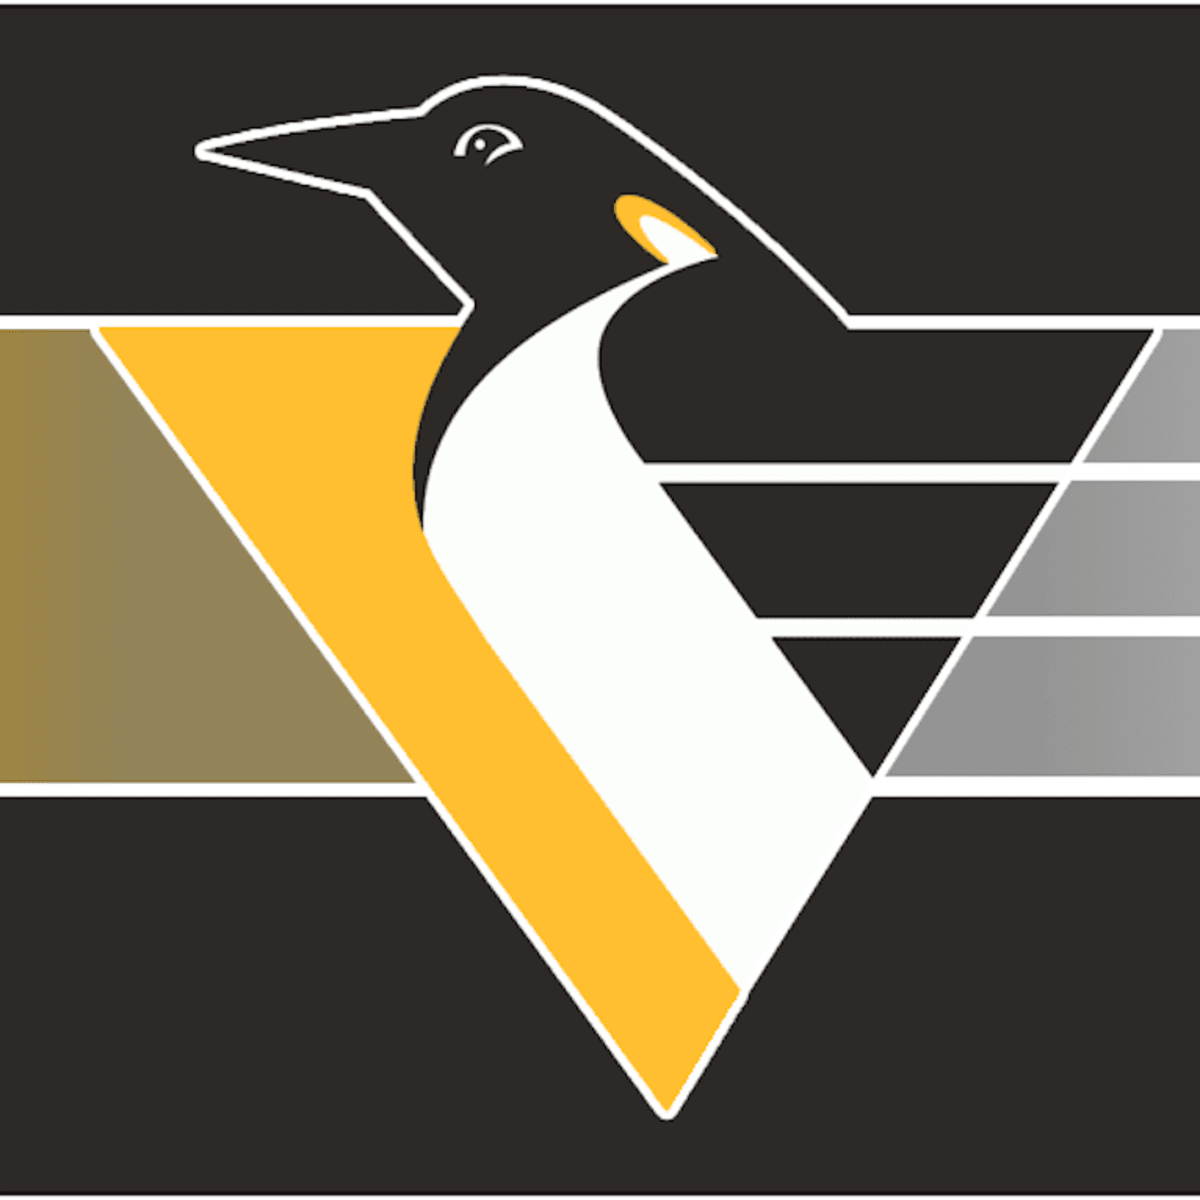 Penguins officially bring back '90's era 'robo' logo on new